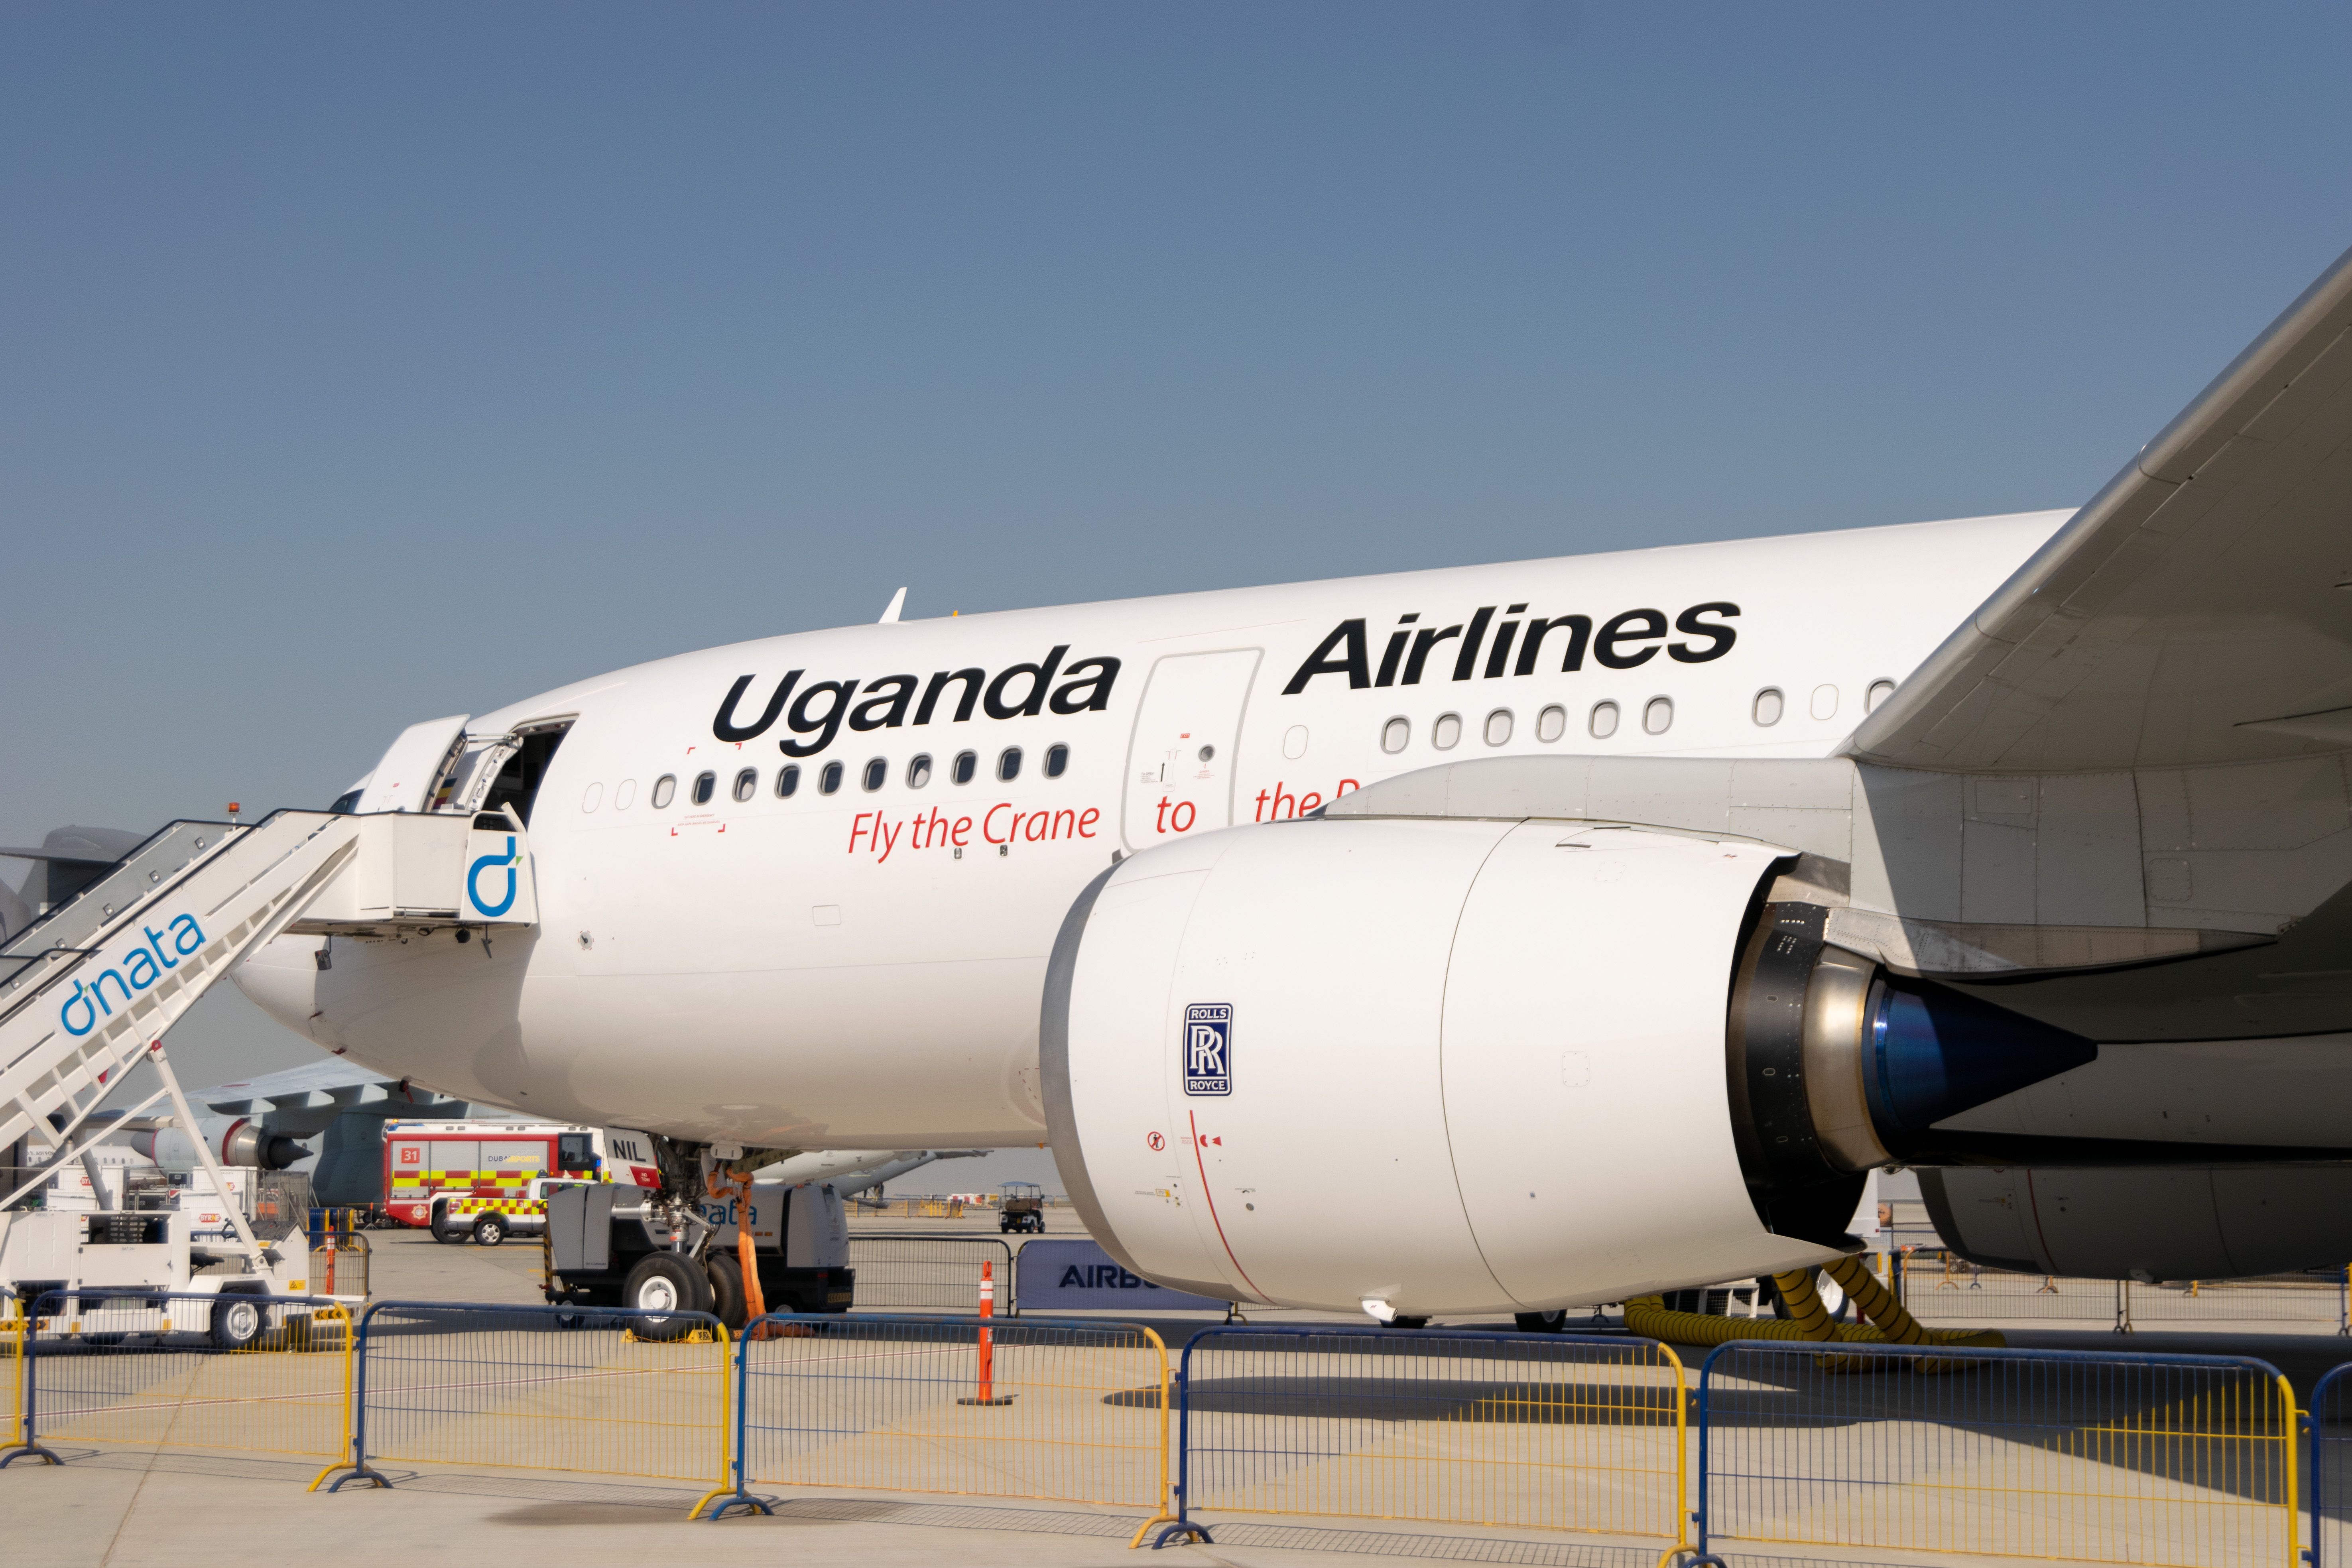 A Uganda Airlines A330-800